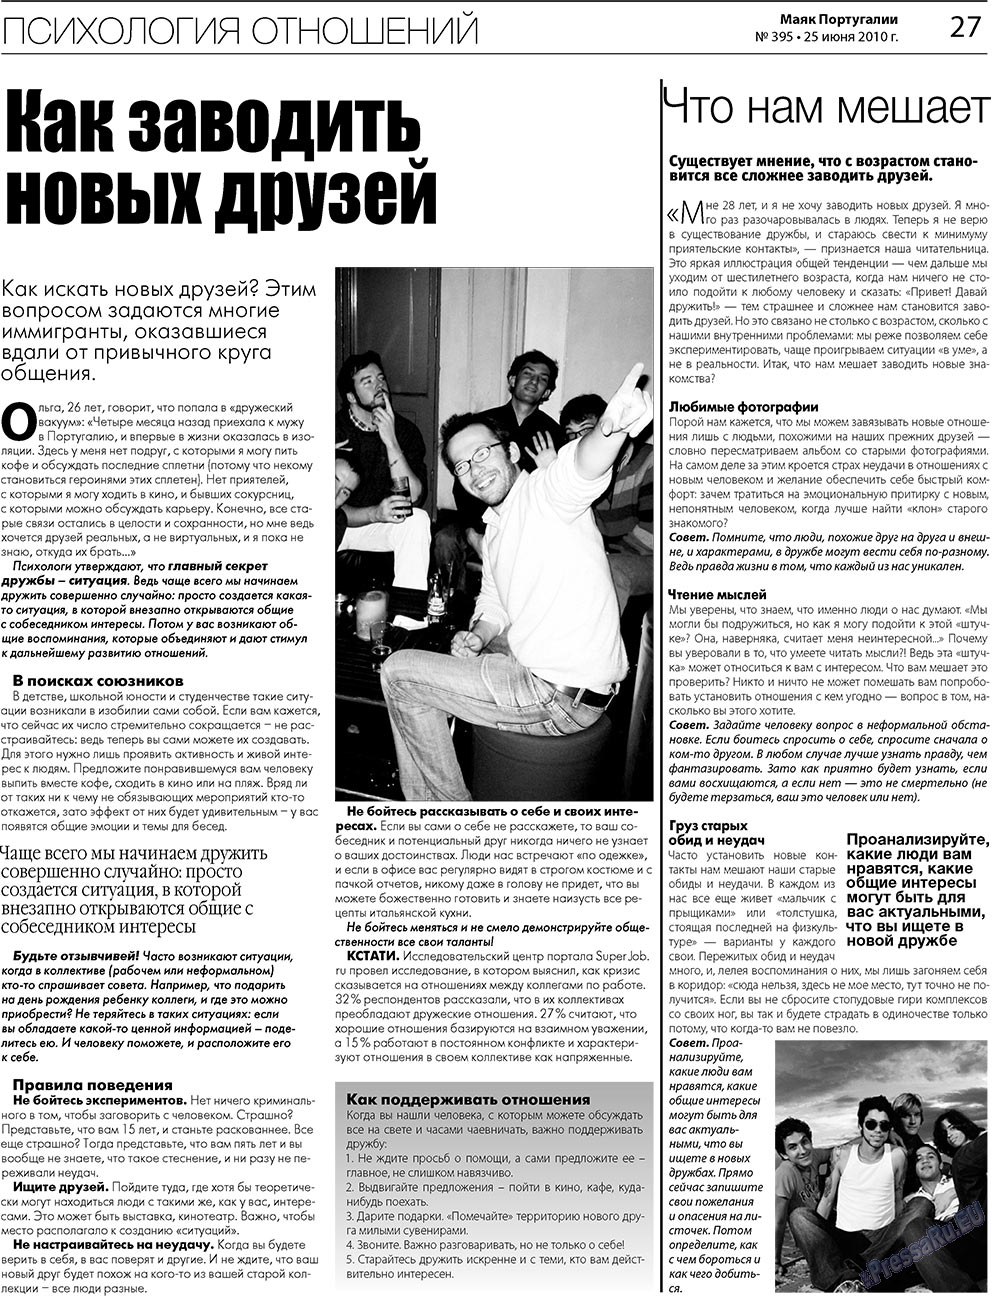 Маяк Португалии, газета. 2010 №395 стр.27